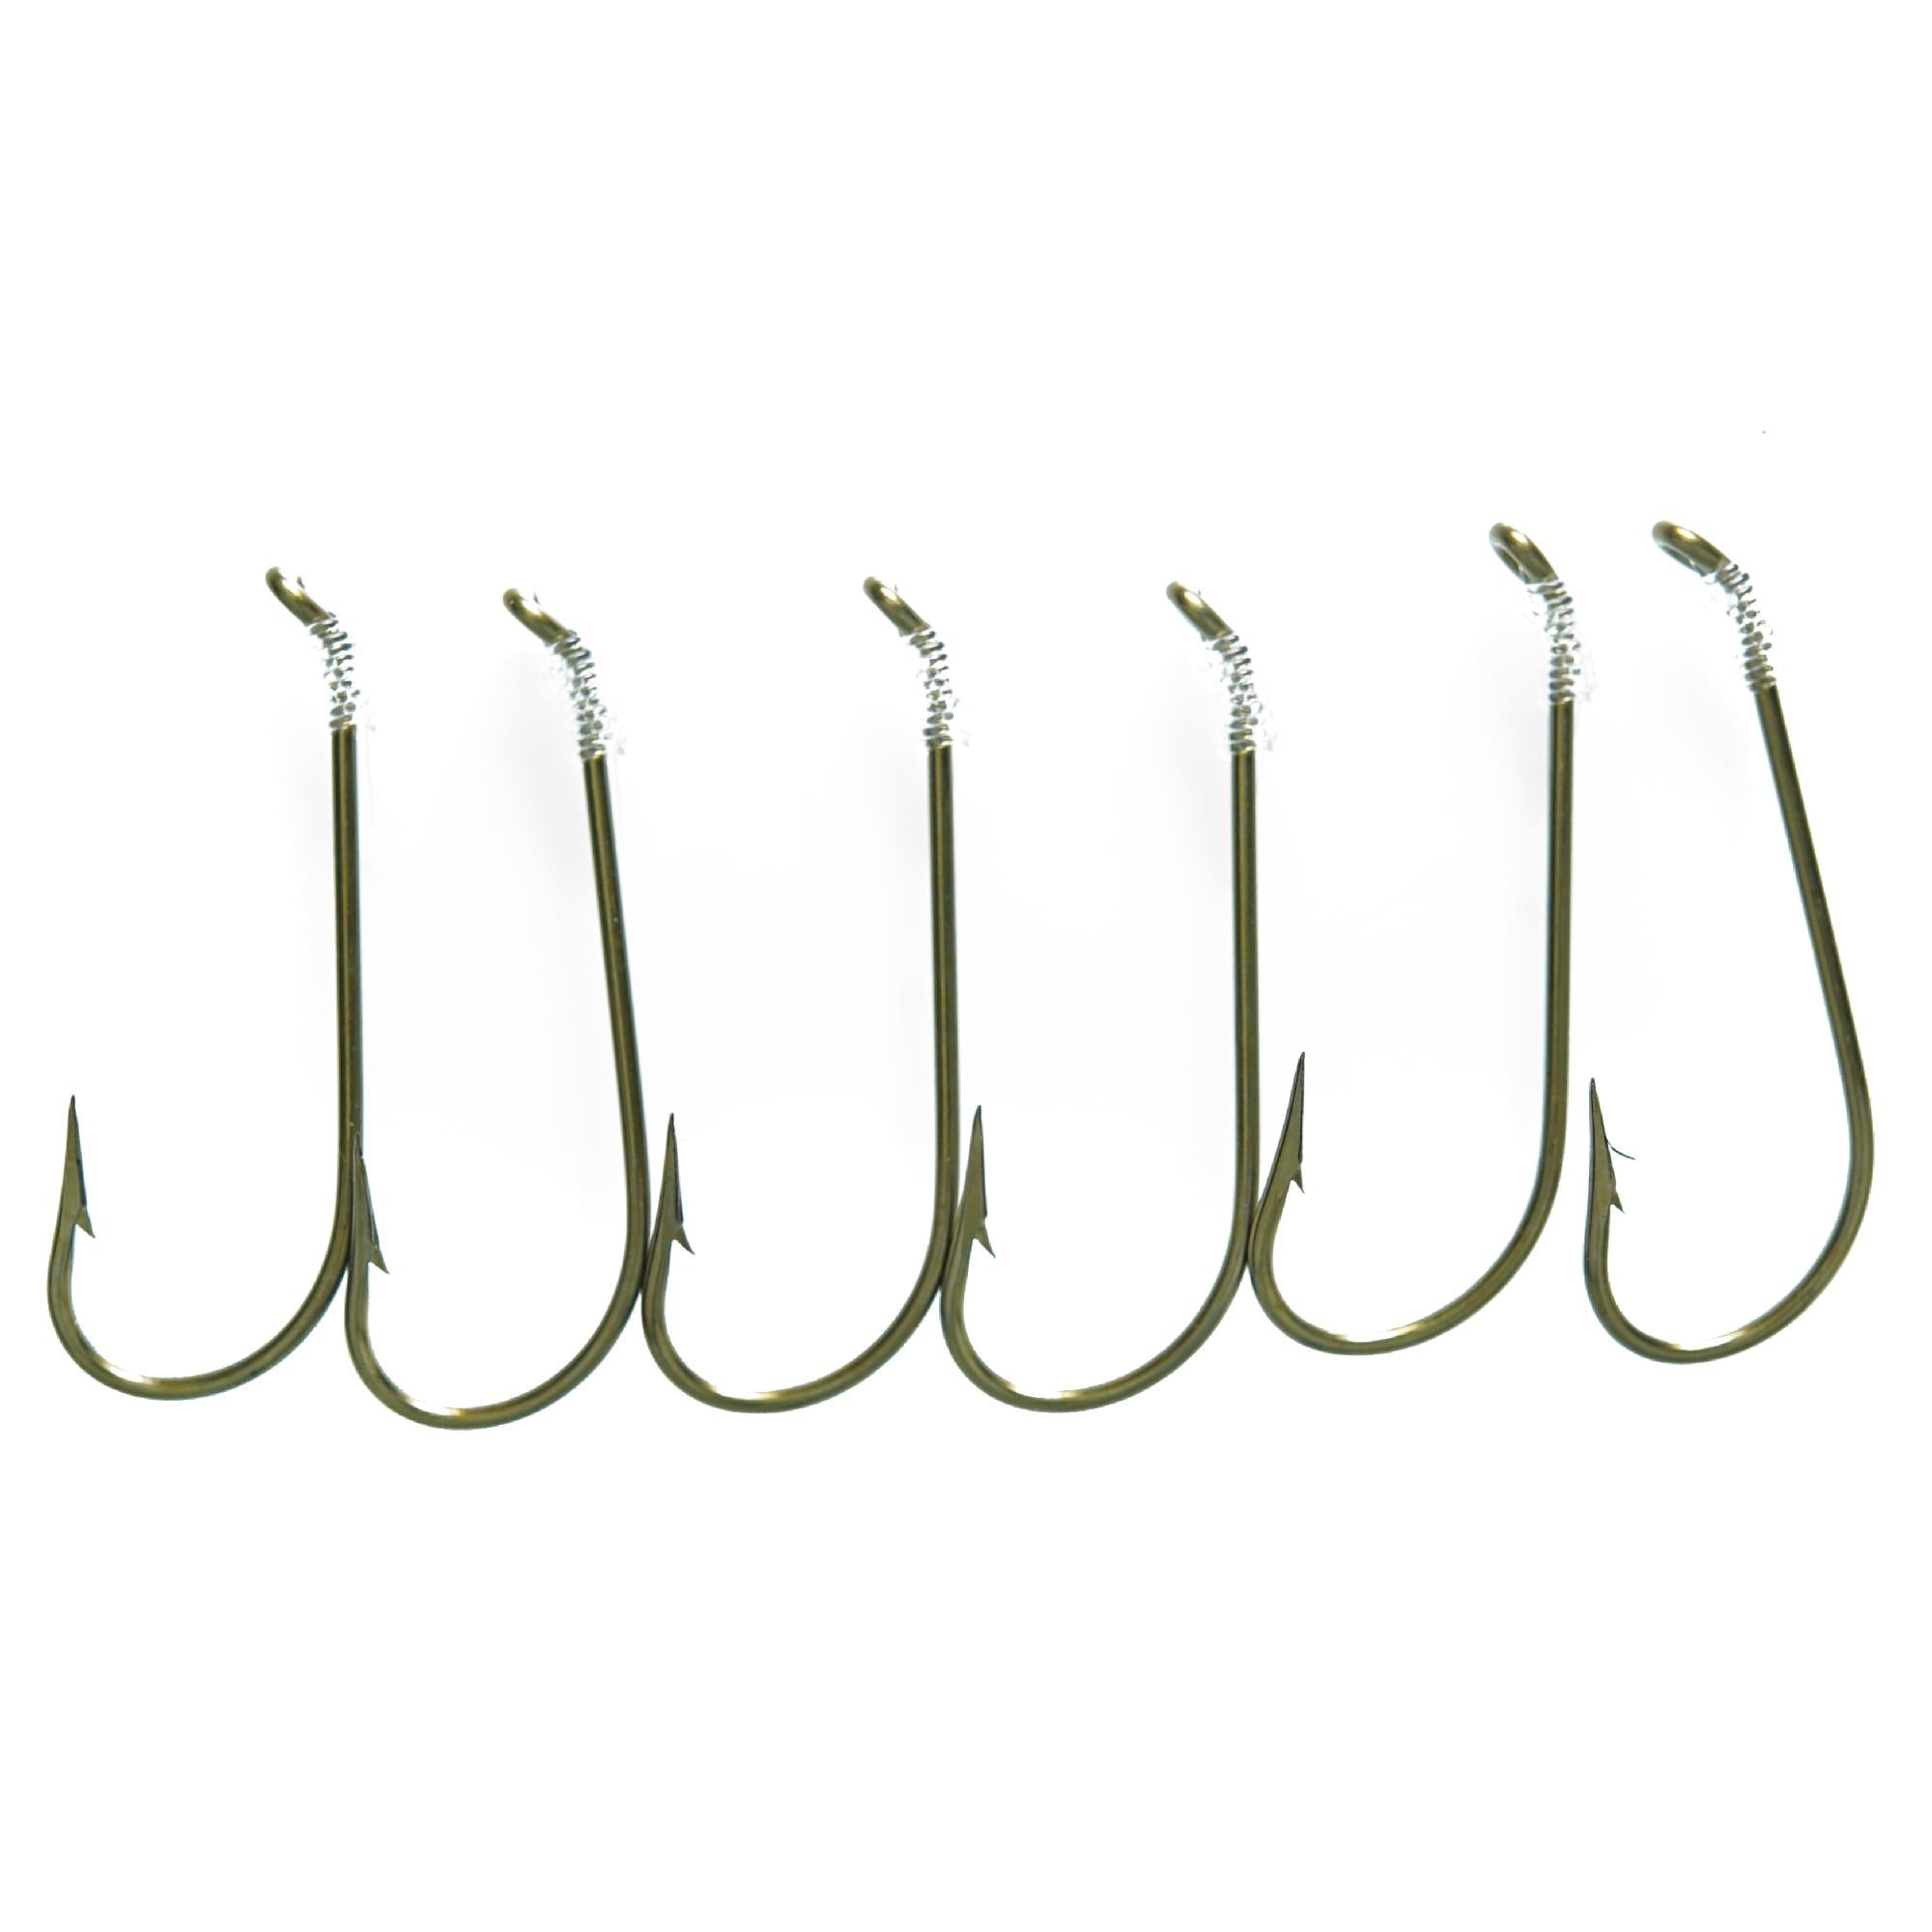 Shur-strike Mustad Wide Gap Snelled Flicker Hook Rigs - Snellhook Wgnkl12'  Size1spin6 Pack at OutdoorShopping